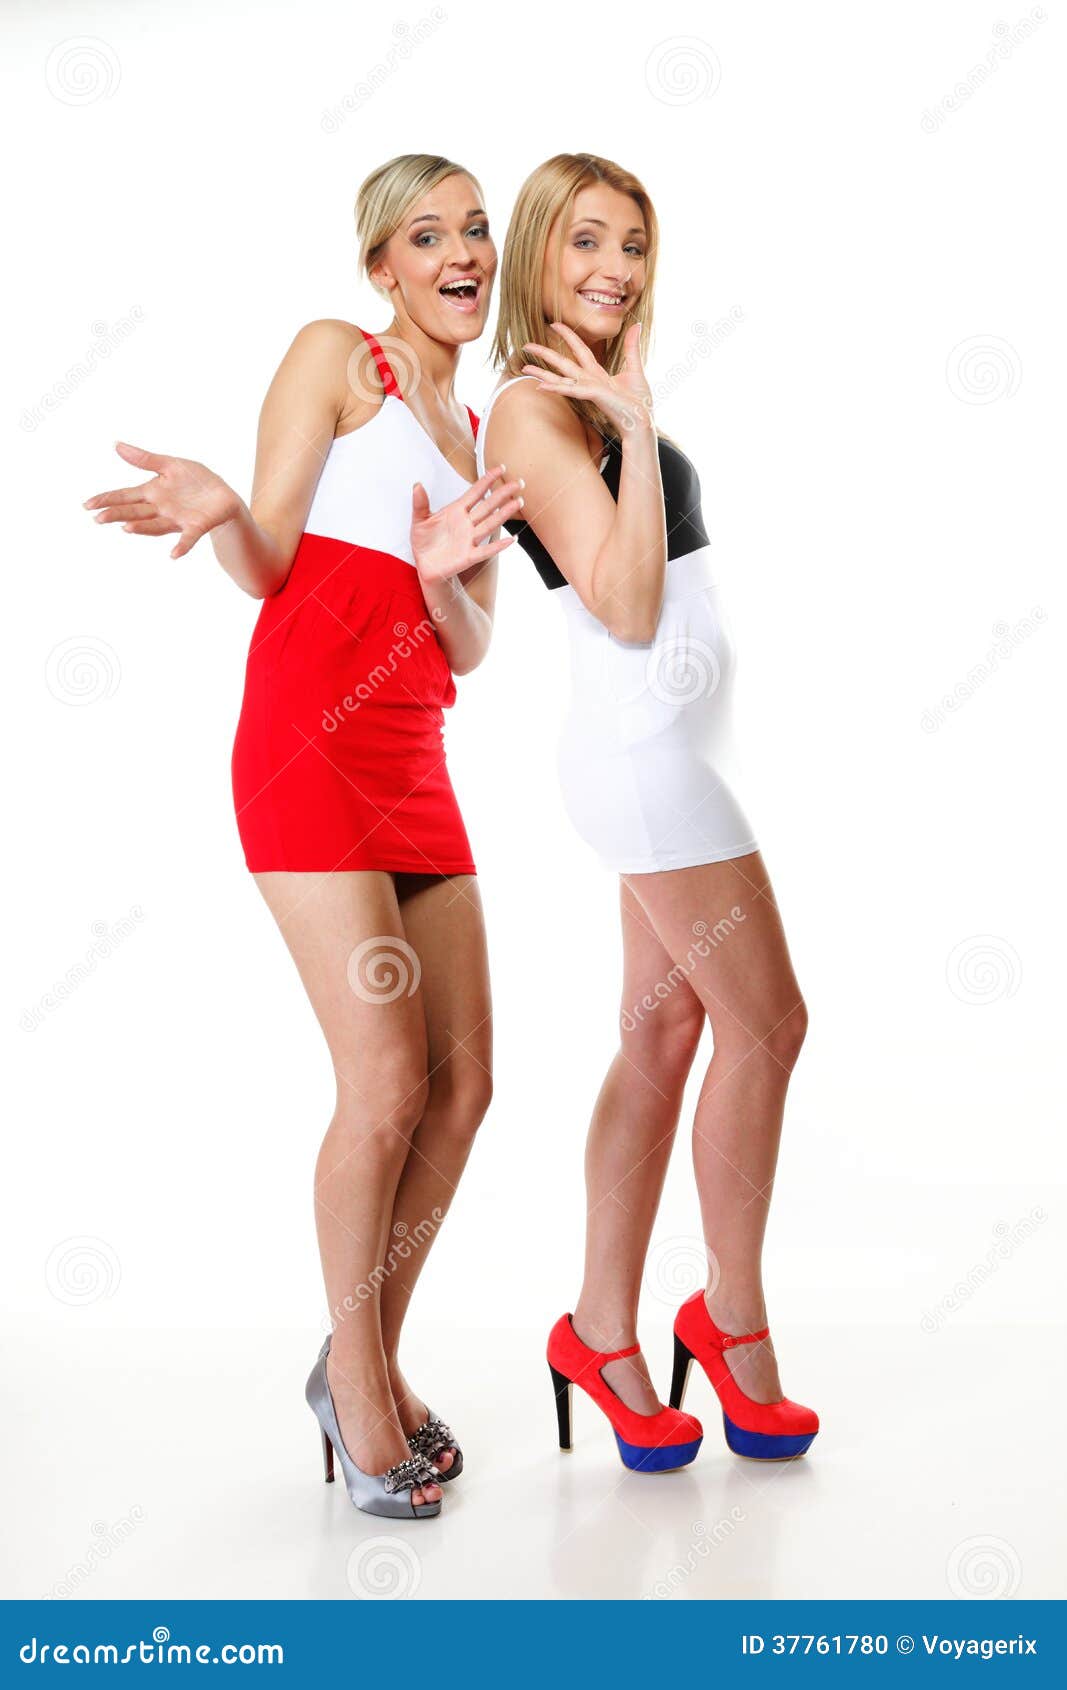 Erotic women in tight skirts